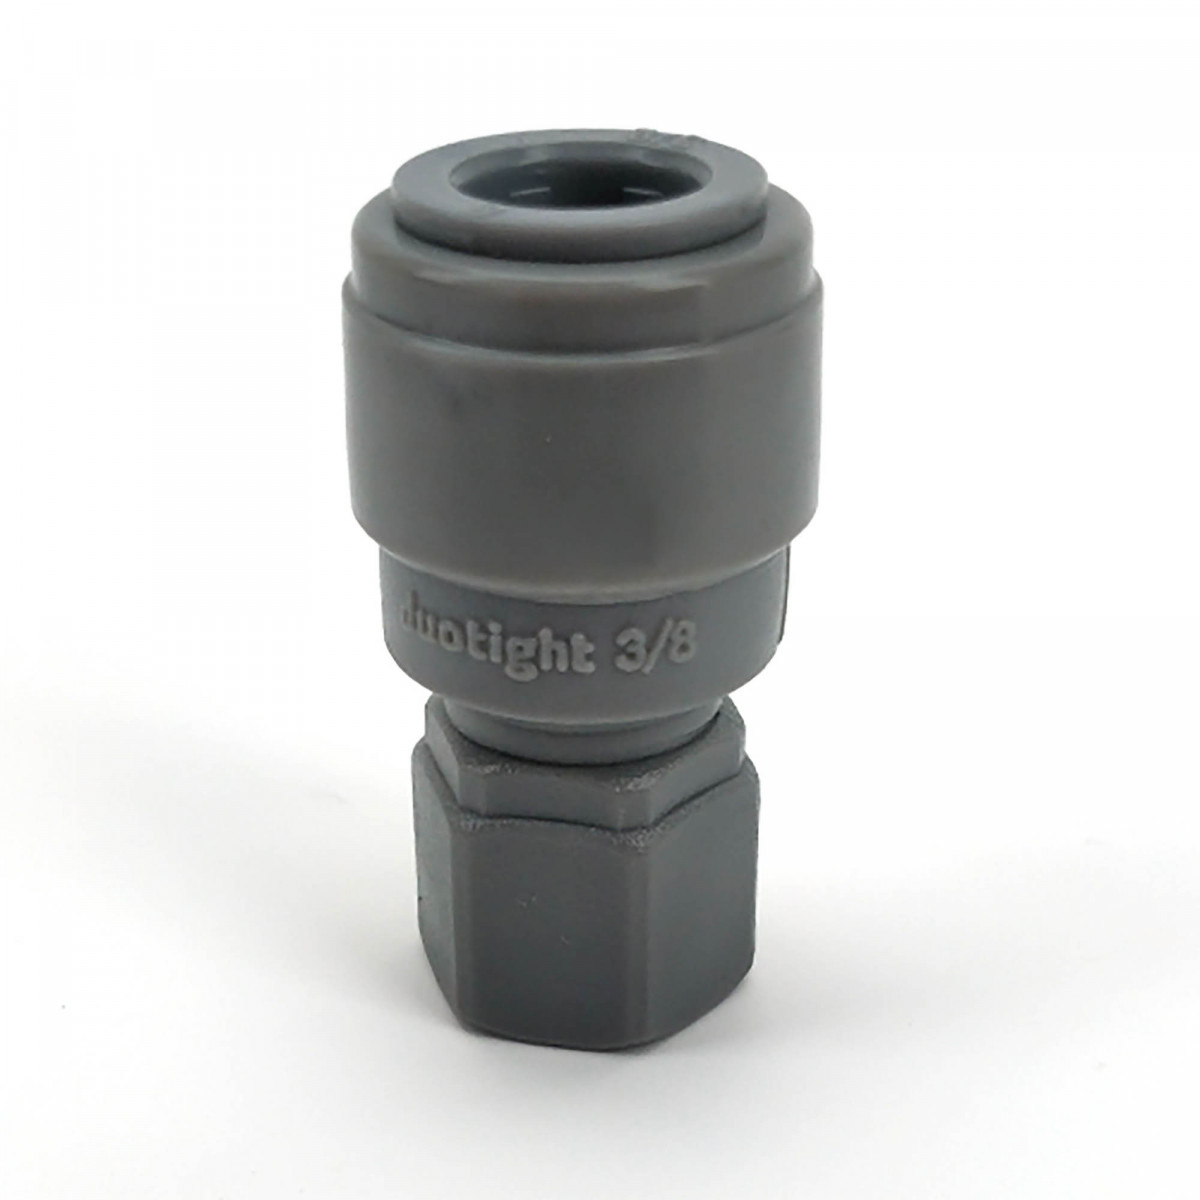 Duotight 9.5 mm (3/8”) push-in fitting FFL